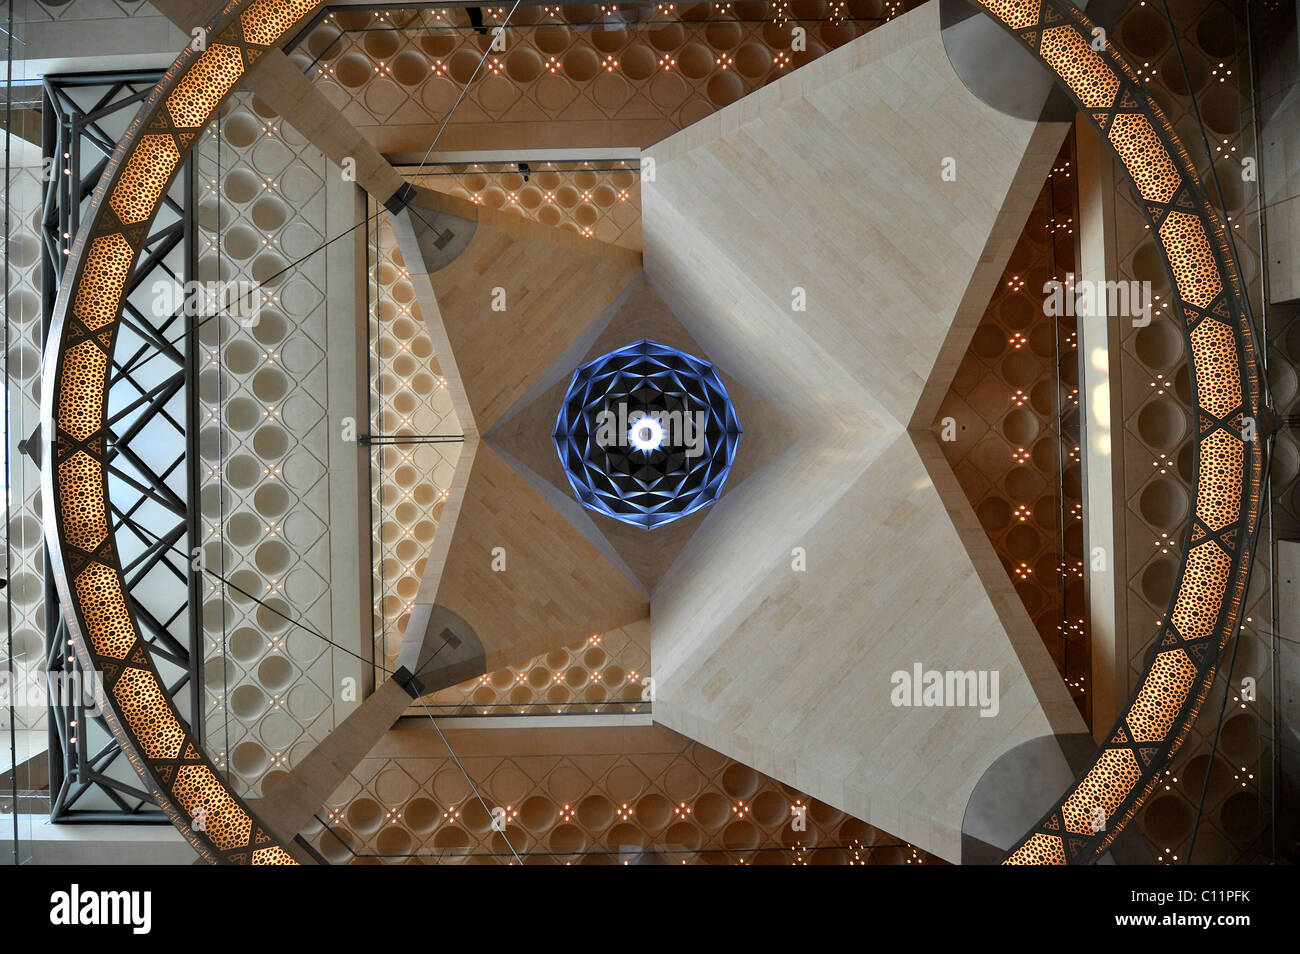 Interior shot, ceiling construction of the atrium, Museum of Islamic Art, designed by I.M. PEI, Corniche, Doha, Qatar Stock Photo